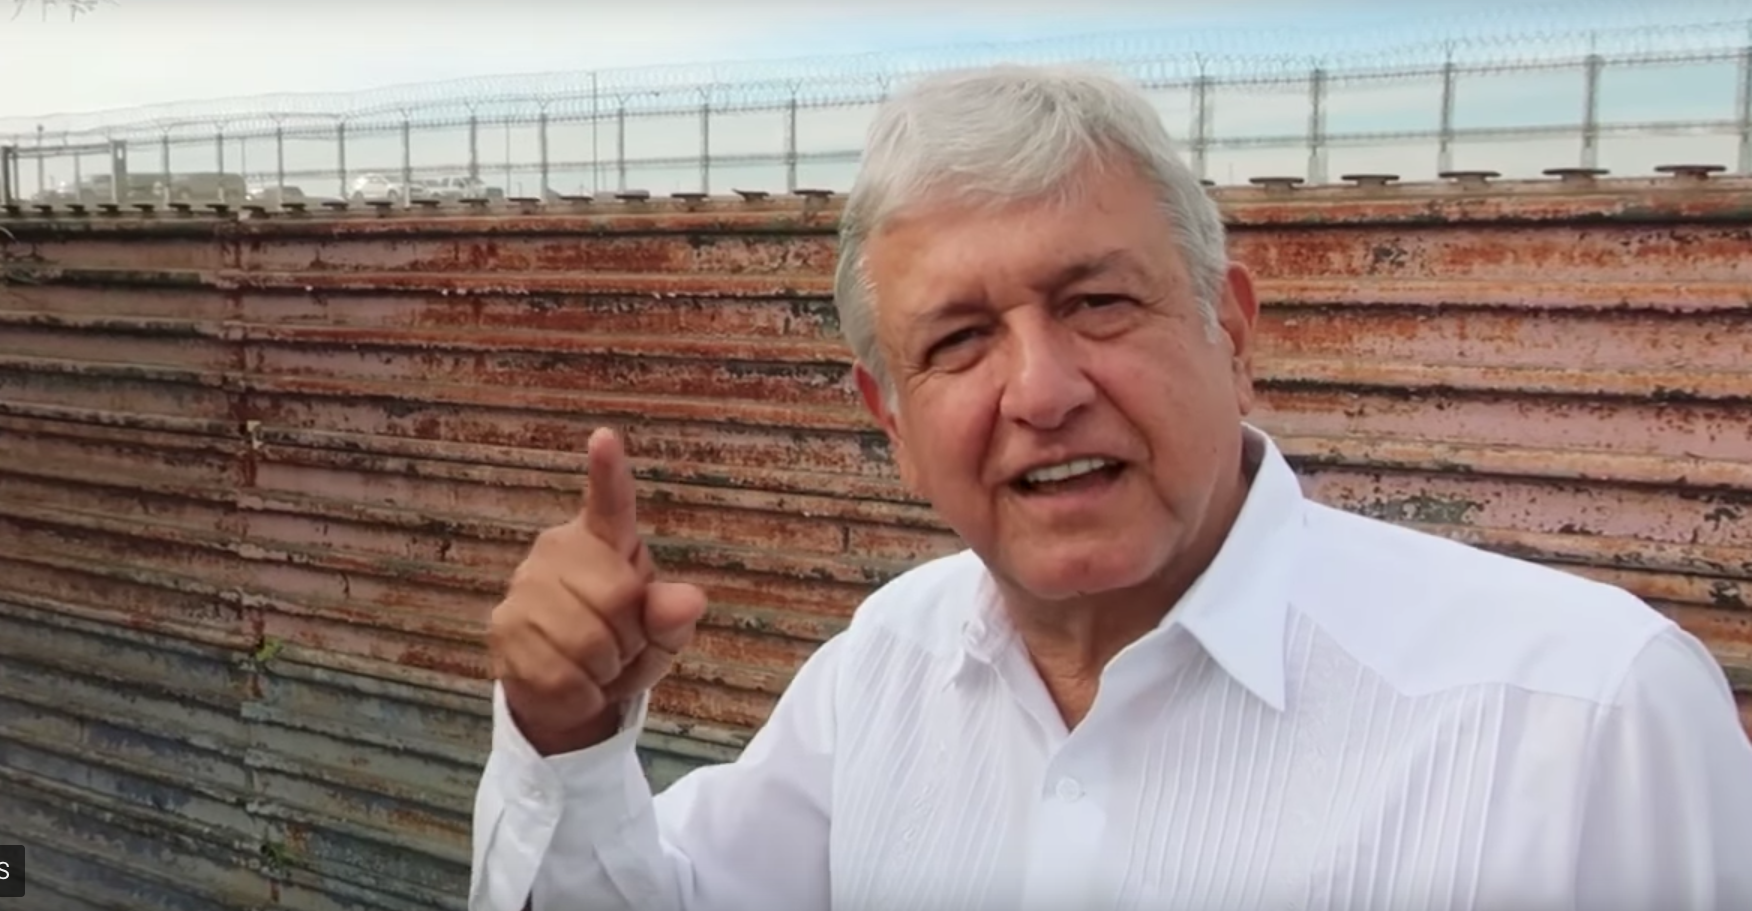 Asegura López Obrador que migración a EU será por gusto, no por necesidad (+video)